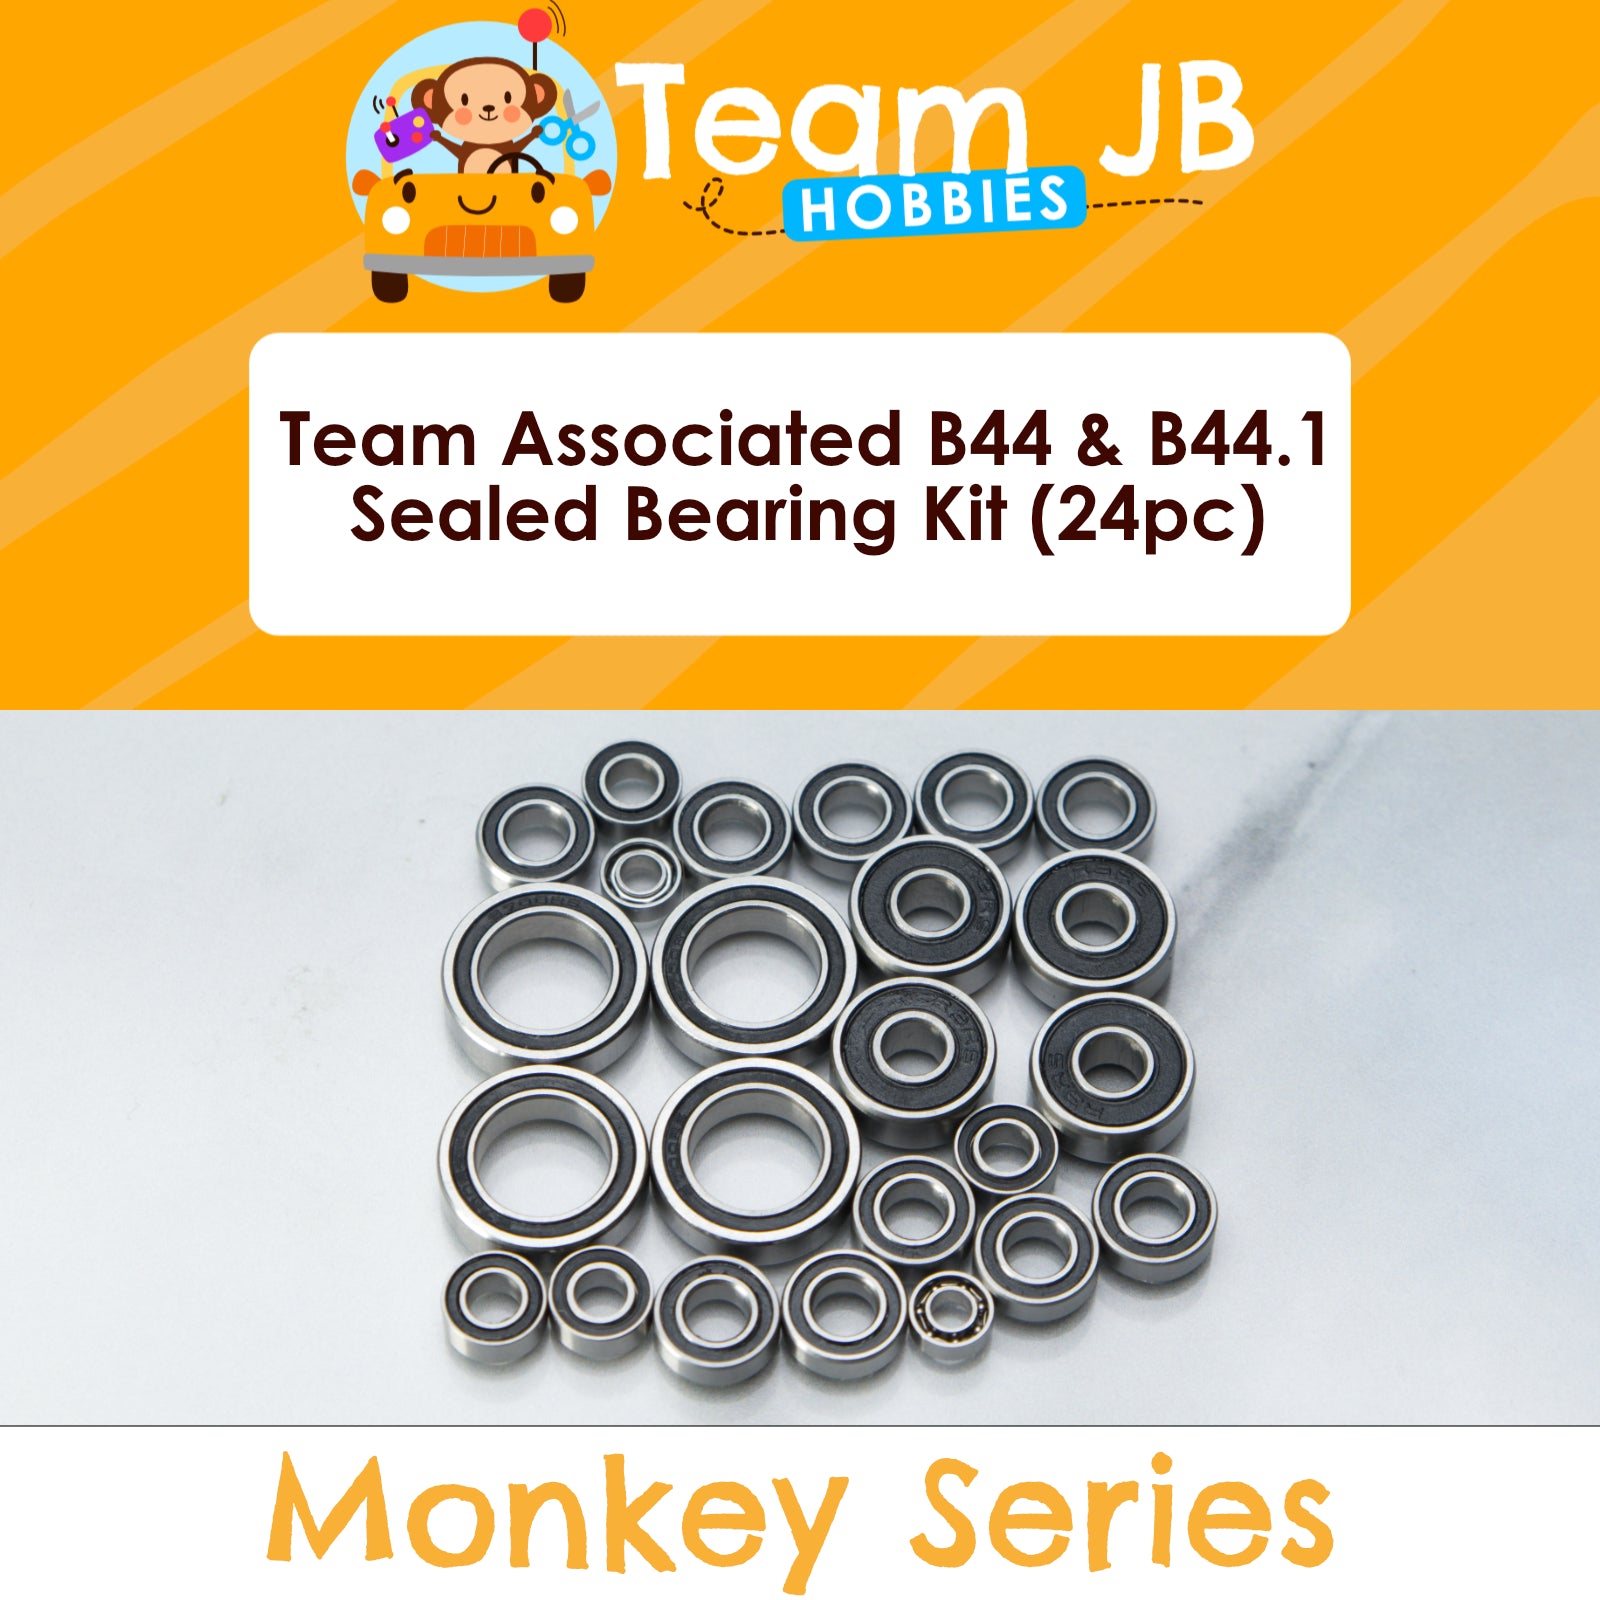 Team Associated B44 & B44.1 - Sealed Bearing Kit